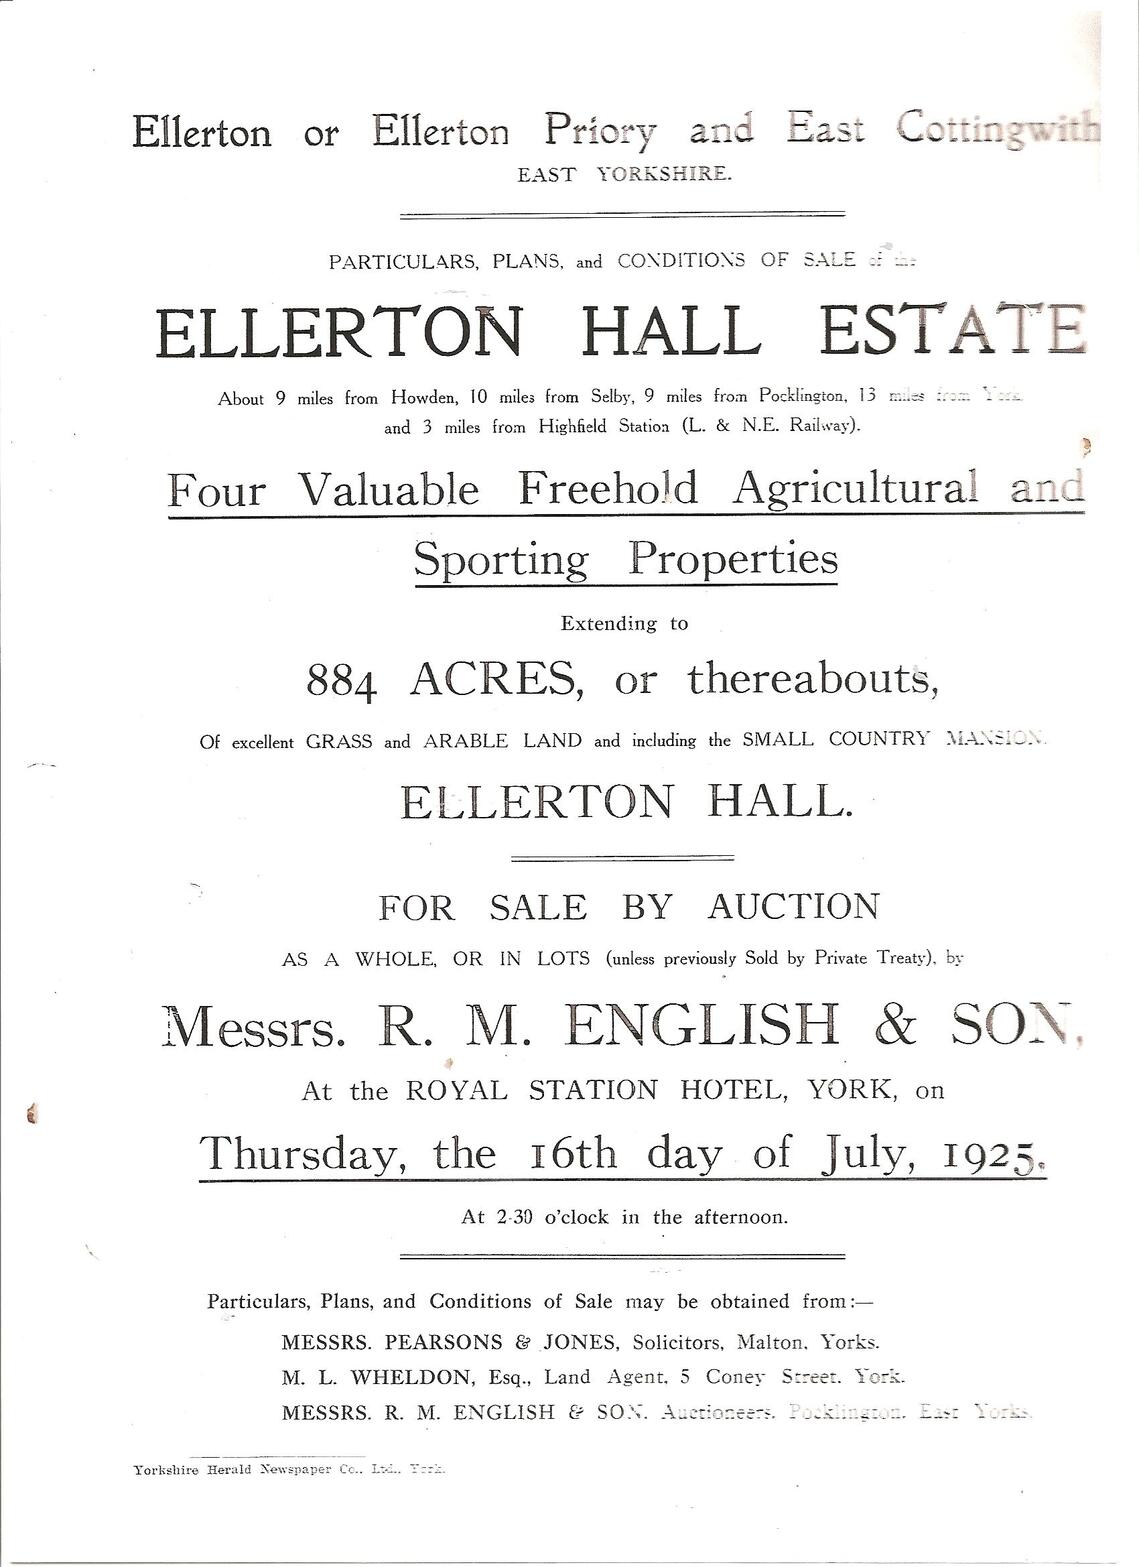 Ellerton Hall Estate